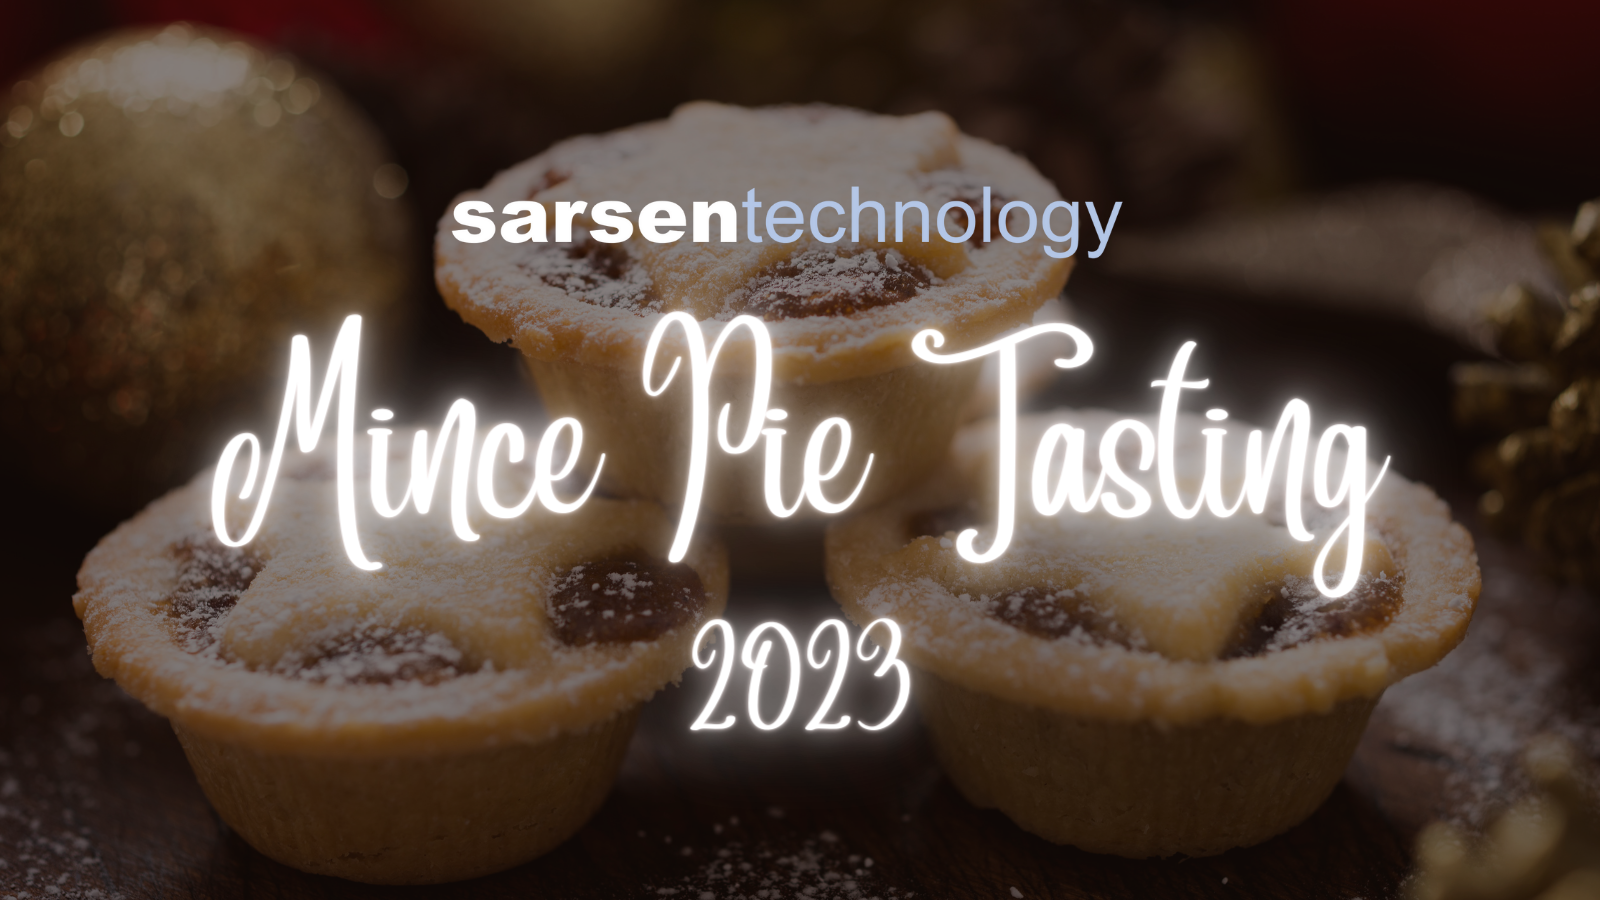 A Little Christmas Nonsense: Sarsen Technology Mince Pie Tasting 2023